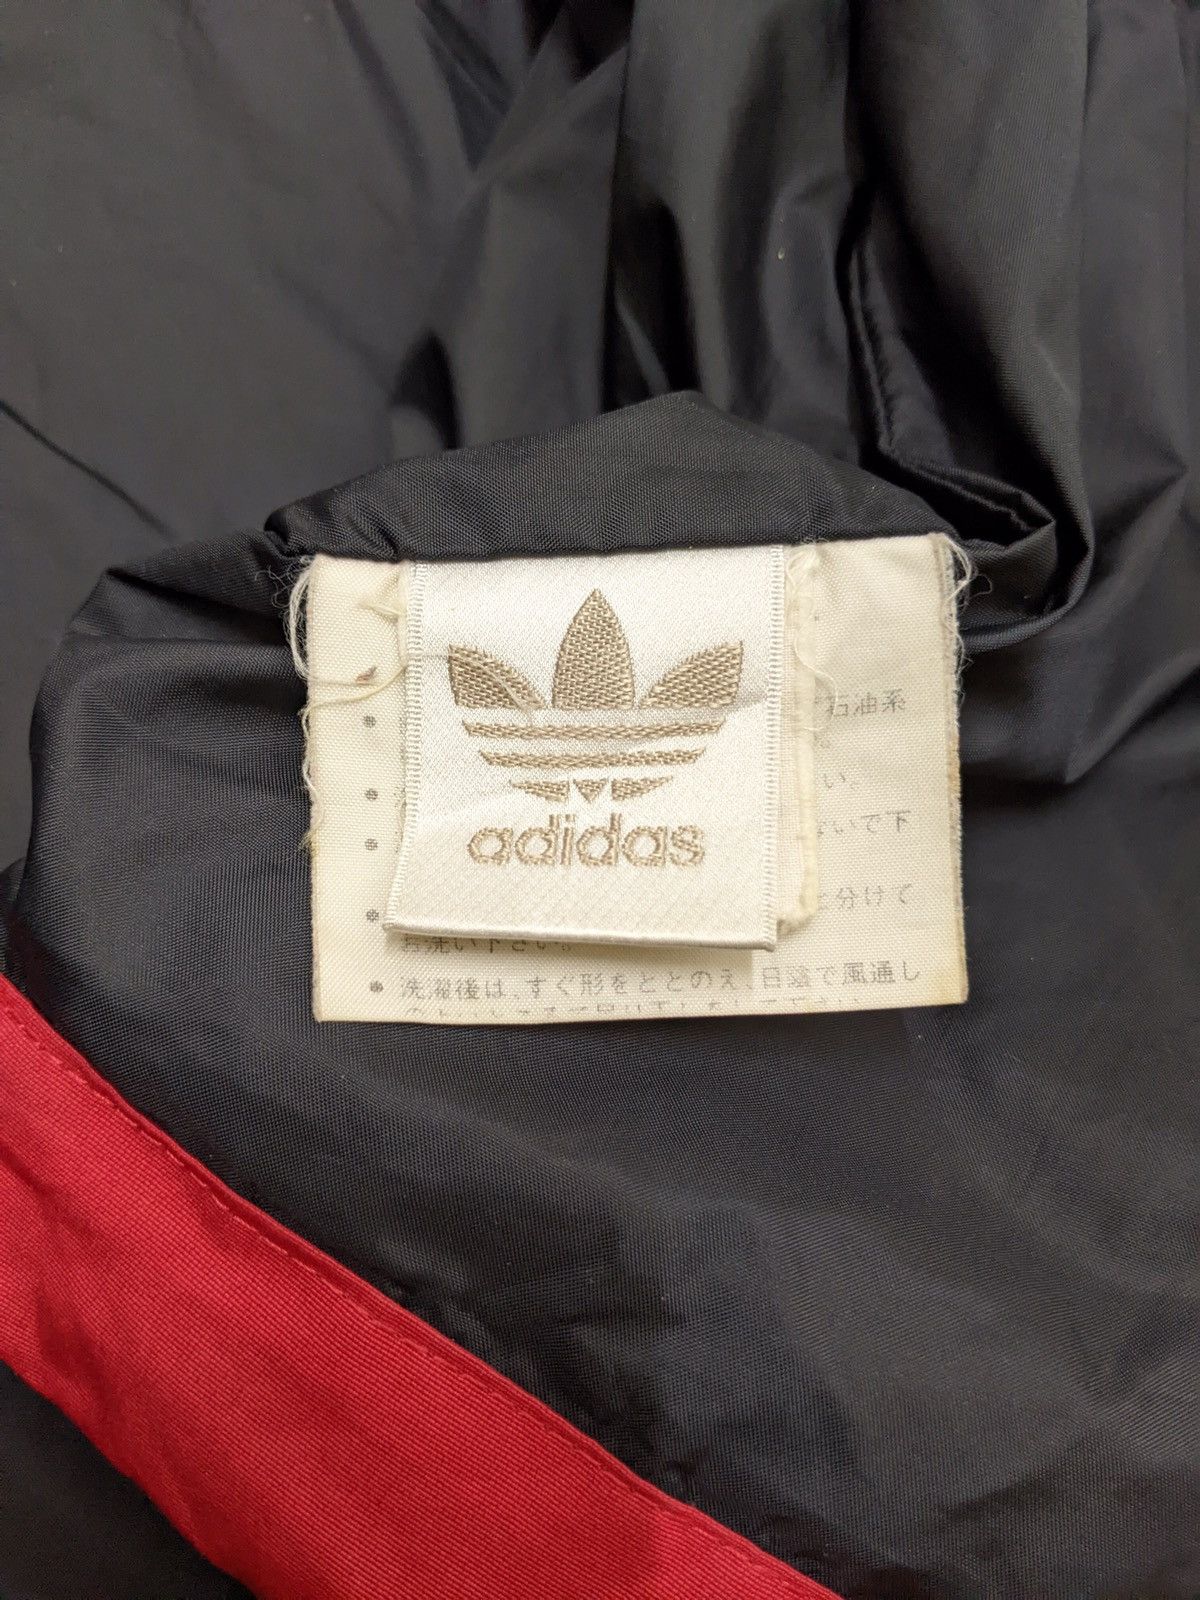 Adidas Vtg 90s Adidas Stripe Hooded Jacket Size US M / EU 48-50 / 2 - 9 Thumbnail